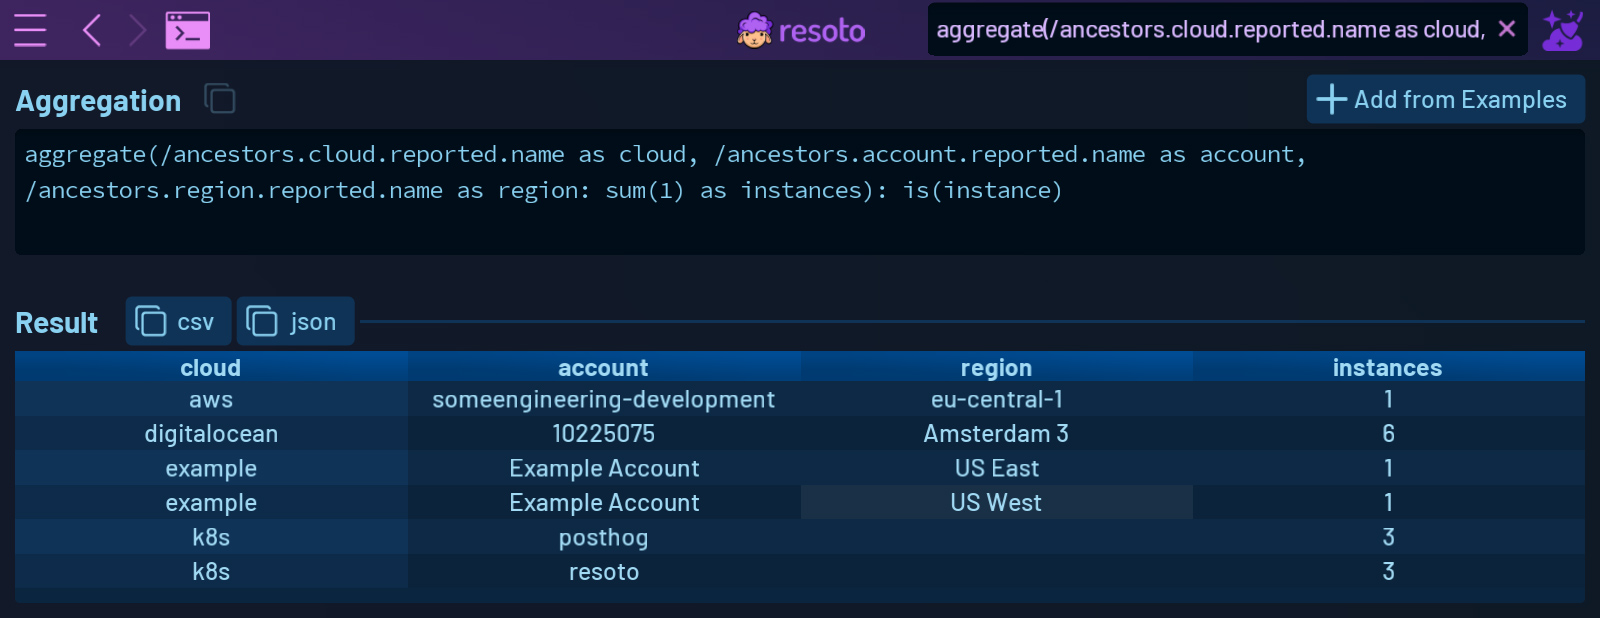 Resoto UI Search Aggregation Results